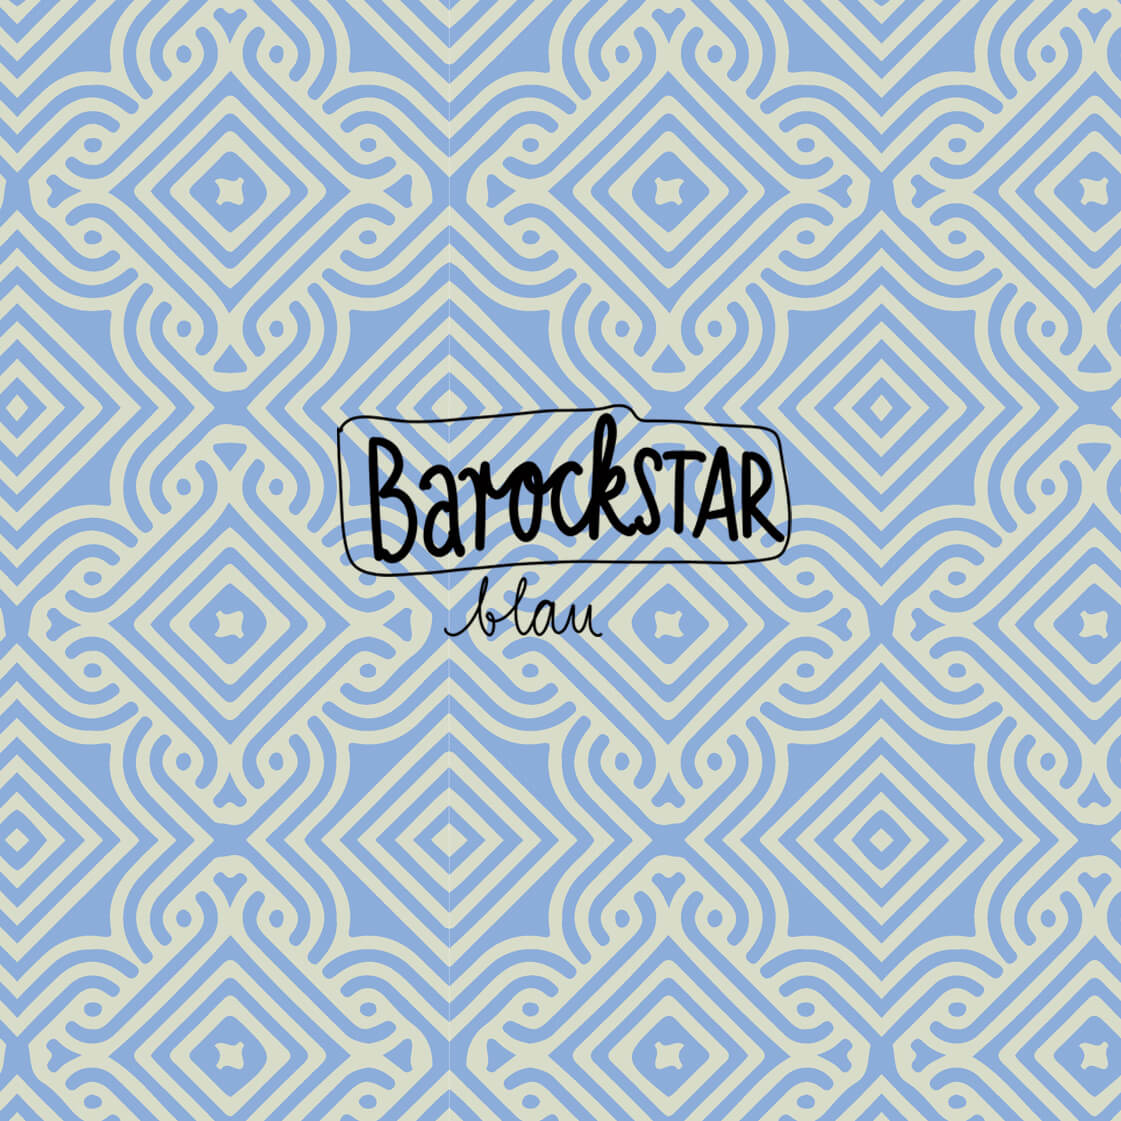 Barockstar, blau